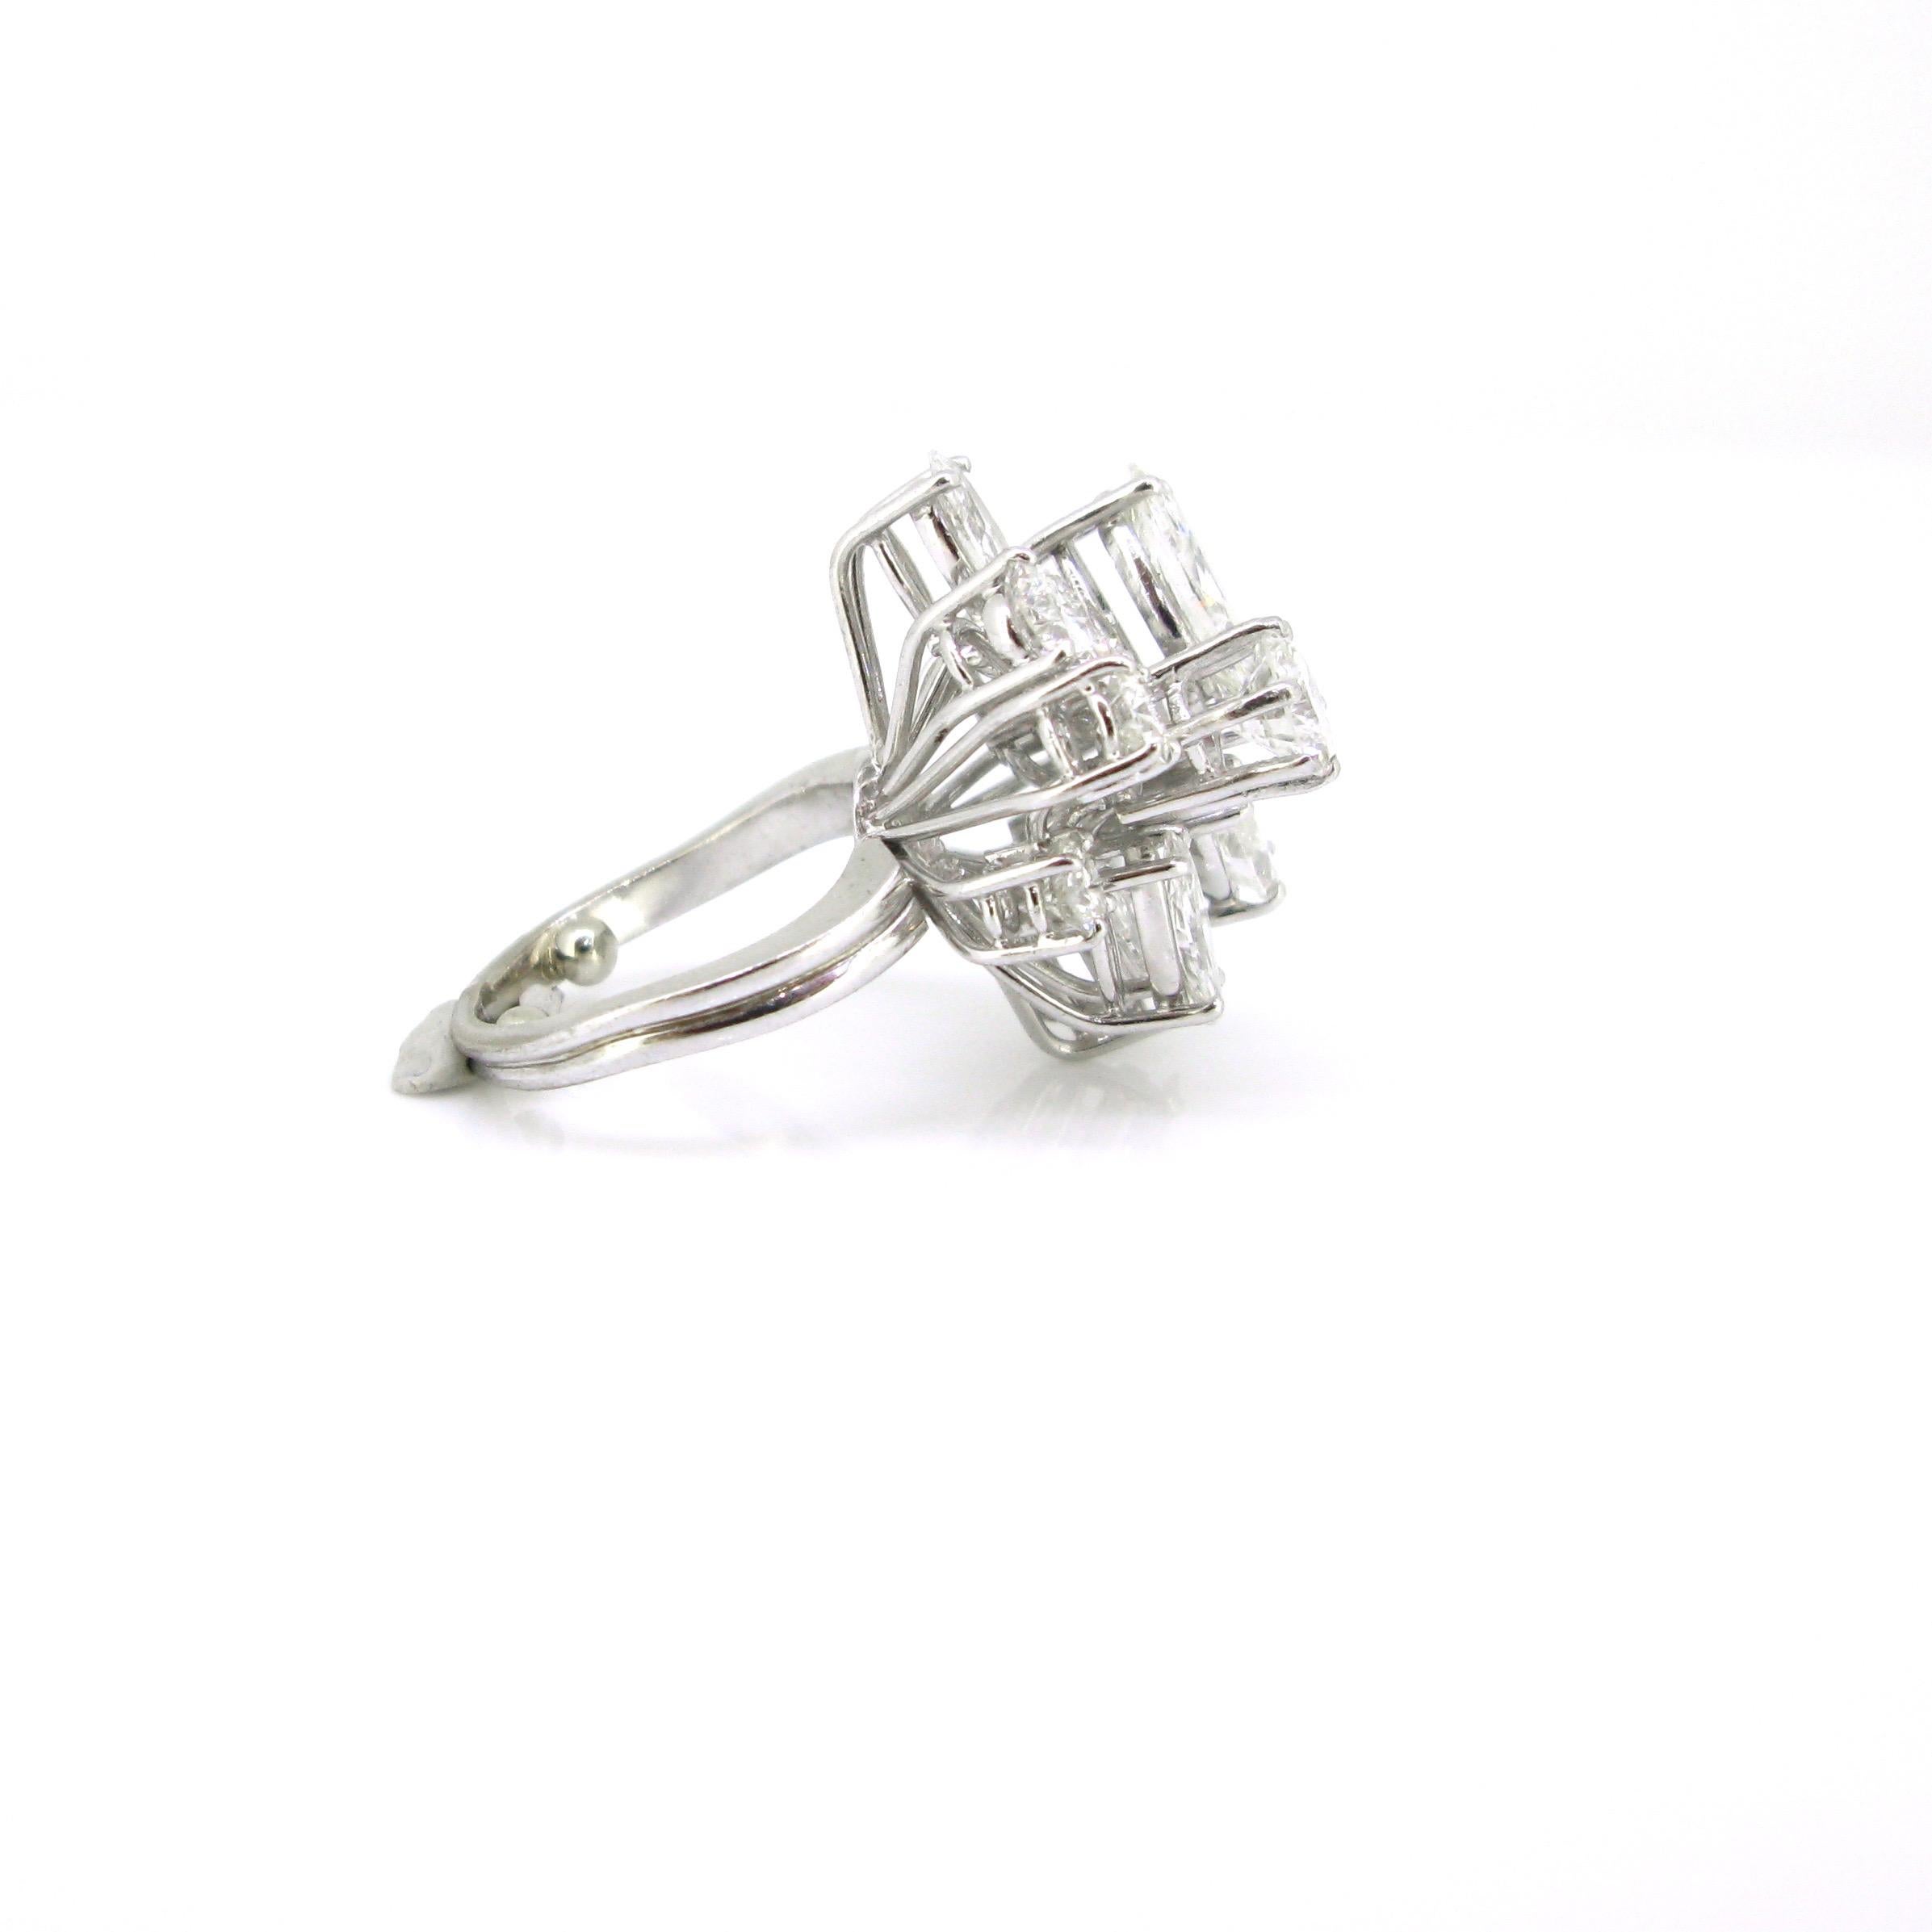 6 carat marquise diamond ring